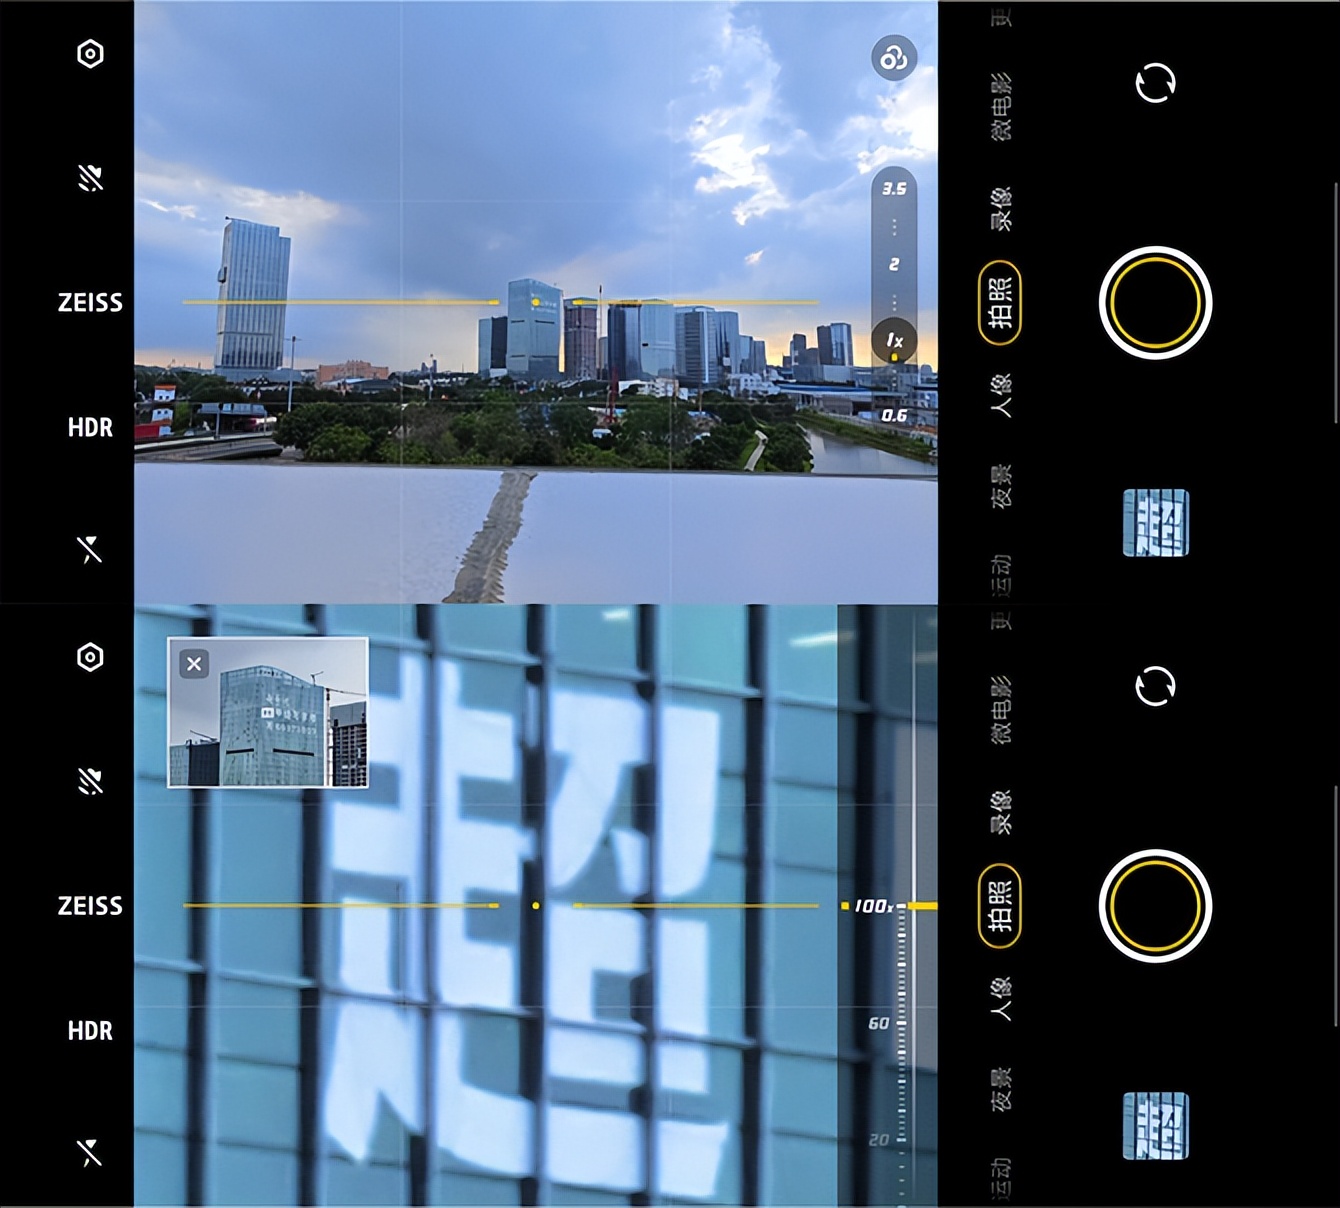 vivo X90 Pro+评测：骁龙8 Gen 2+大底长焦，性能和影像都杀疯了